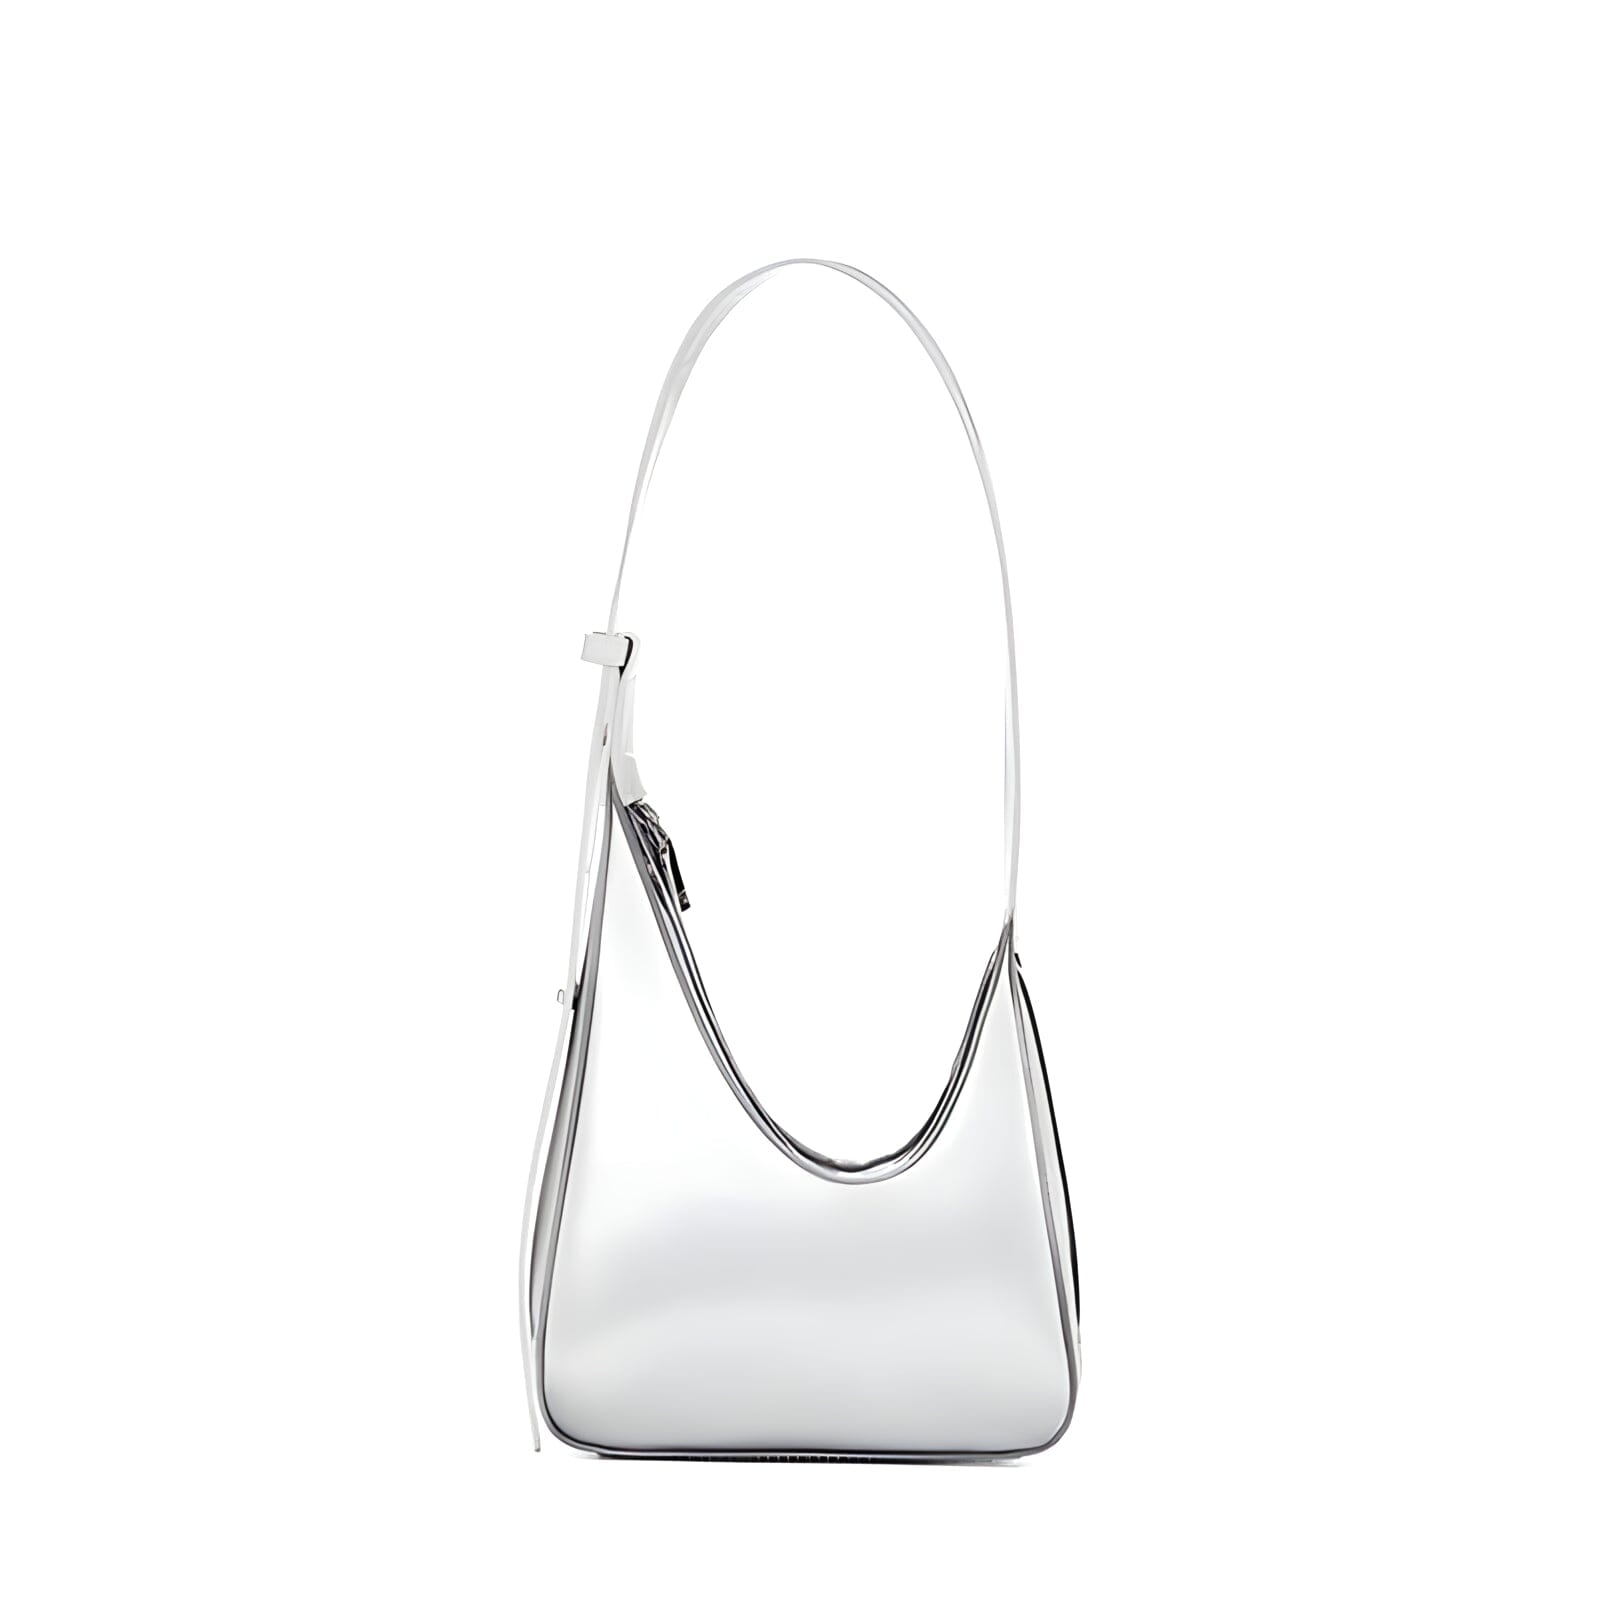 The Lunar Handbag Purse - Multiple Colors 0 SA Styles Silver 